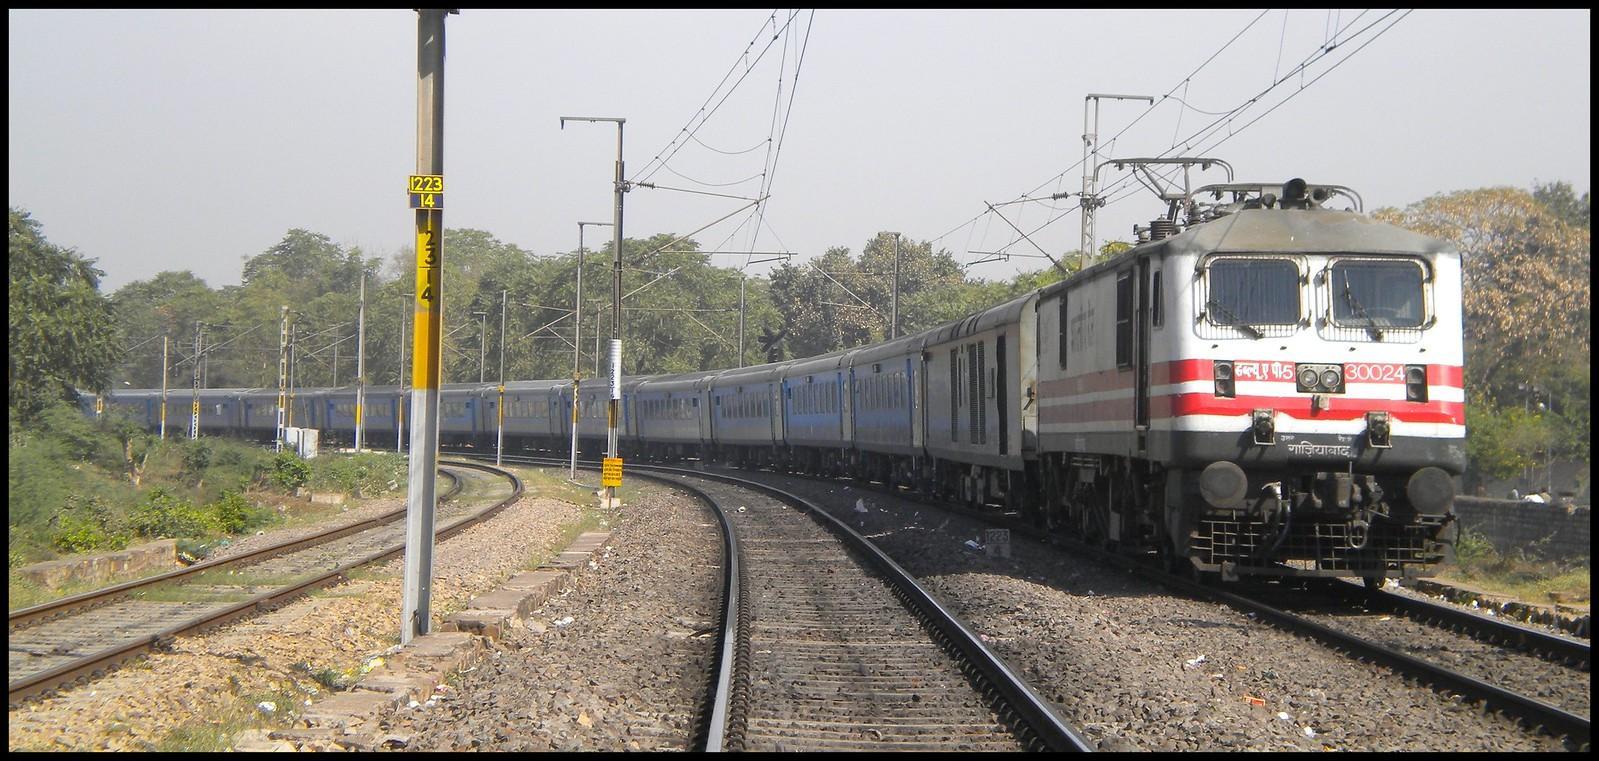 #13 Shatabdi & Duronto Express: Revolutionizing Intercity Travel (Indian Railways Series)